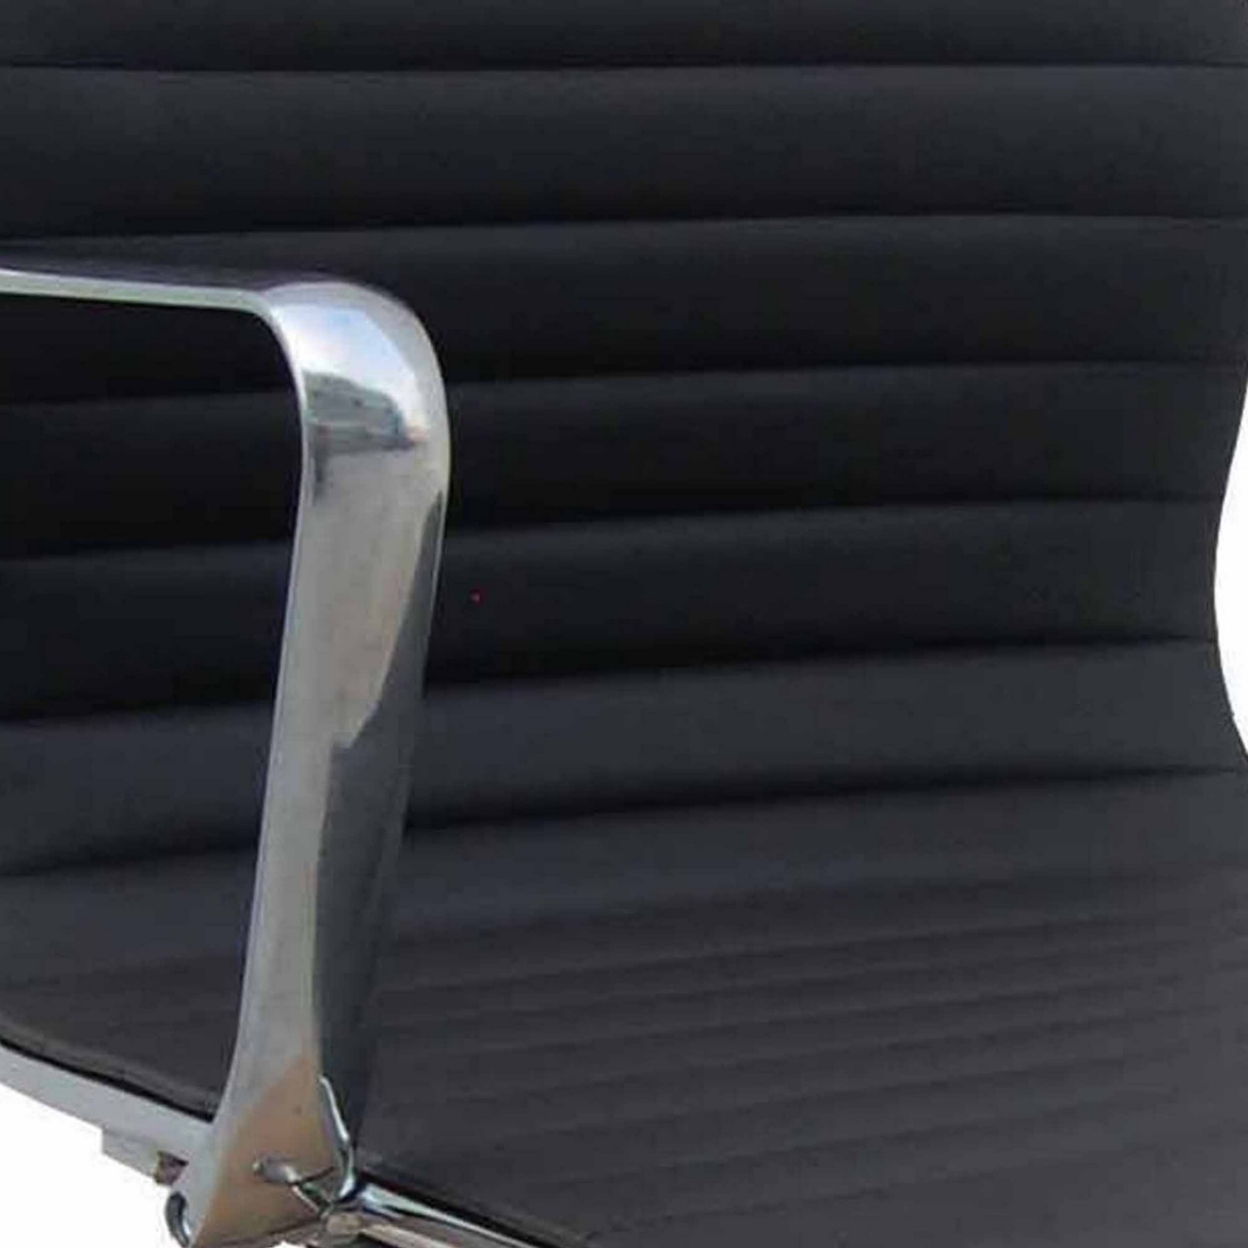 Elle 20 Inch Low Back Swivel Office Chair, Wheels, Tufted Black And Chrome- Saltoro Sherpi